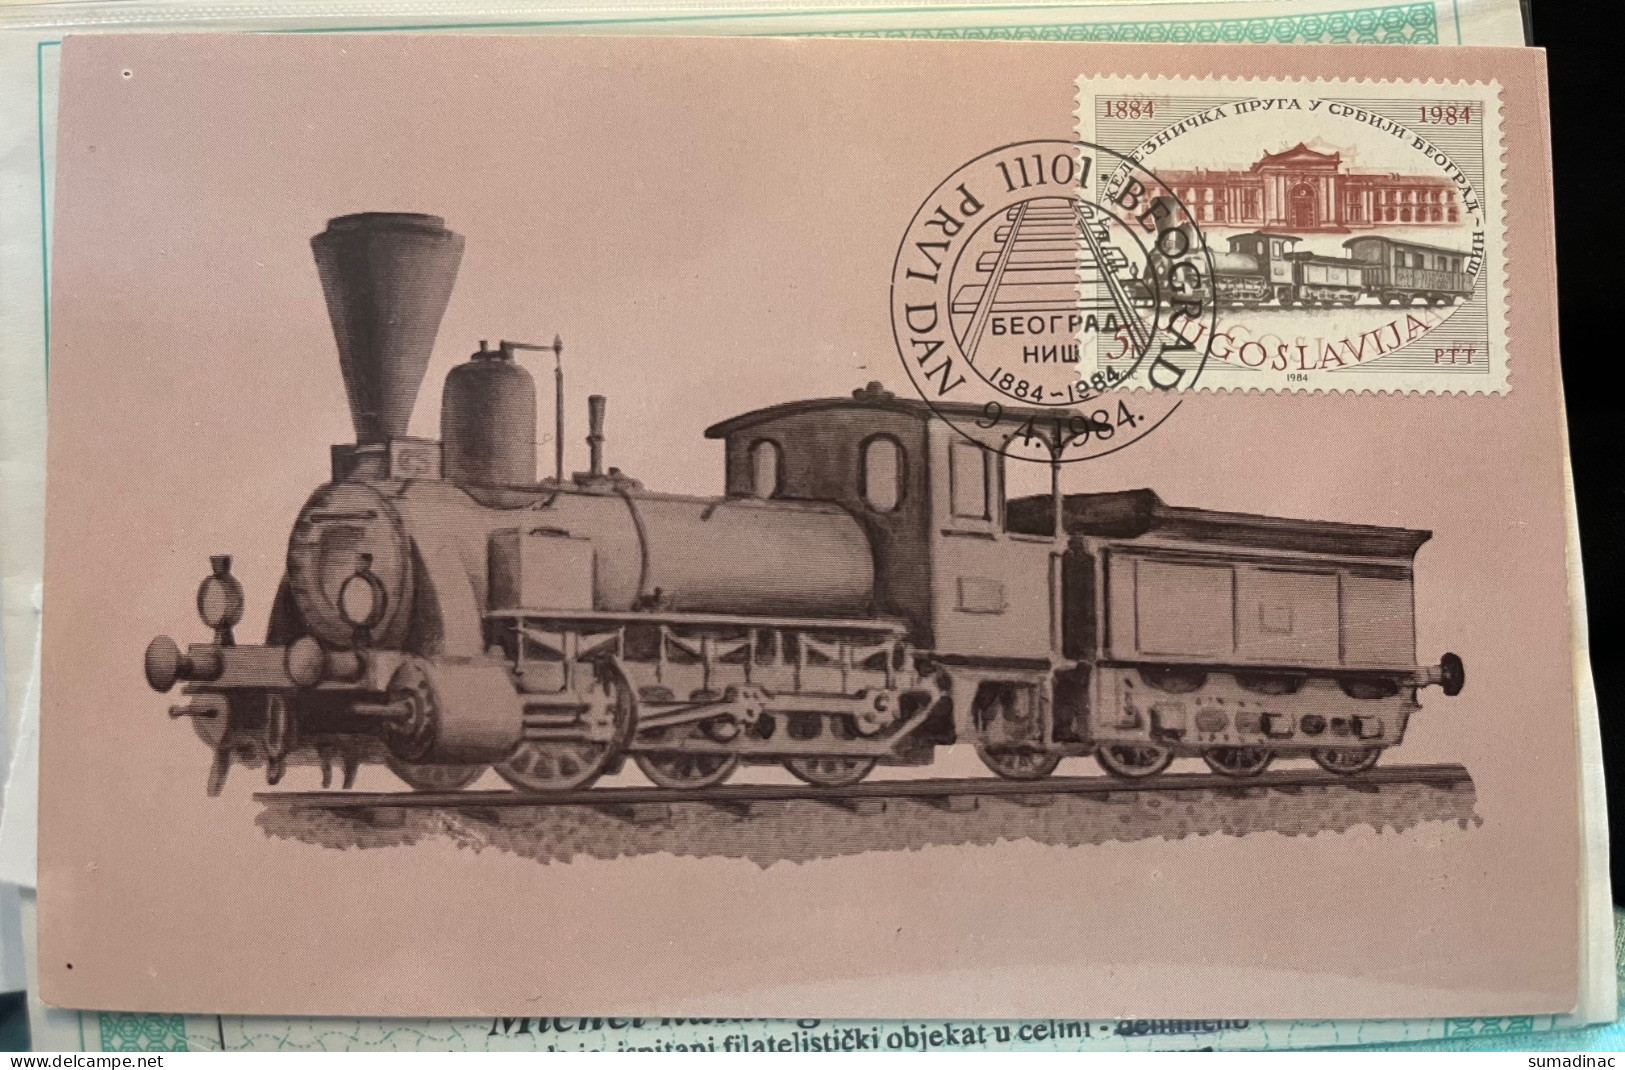 Yugoslavia Maxi Card With Double Print On A Stamp, Train, Railway, Certificate A. Krstić - Ongetande, Proeven & Plaatfouten